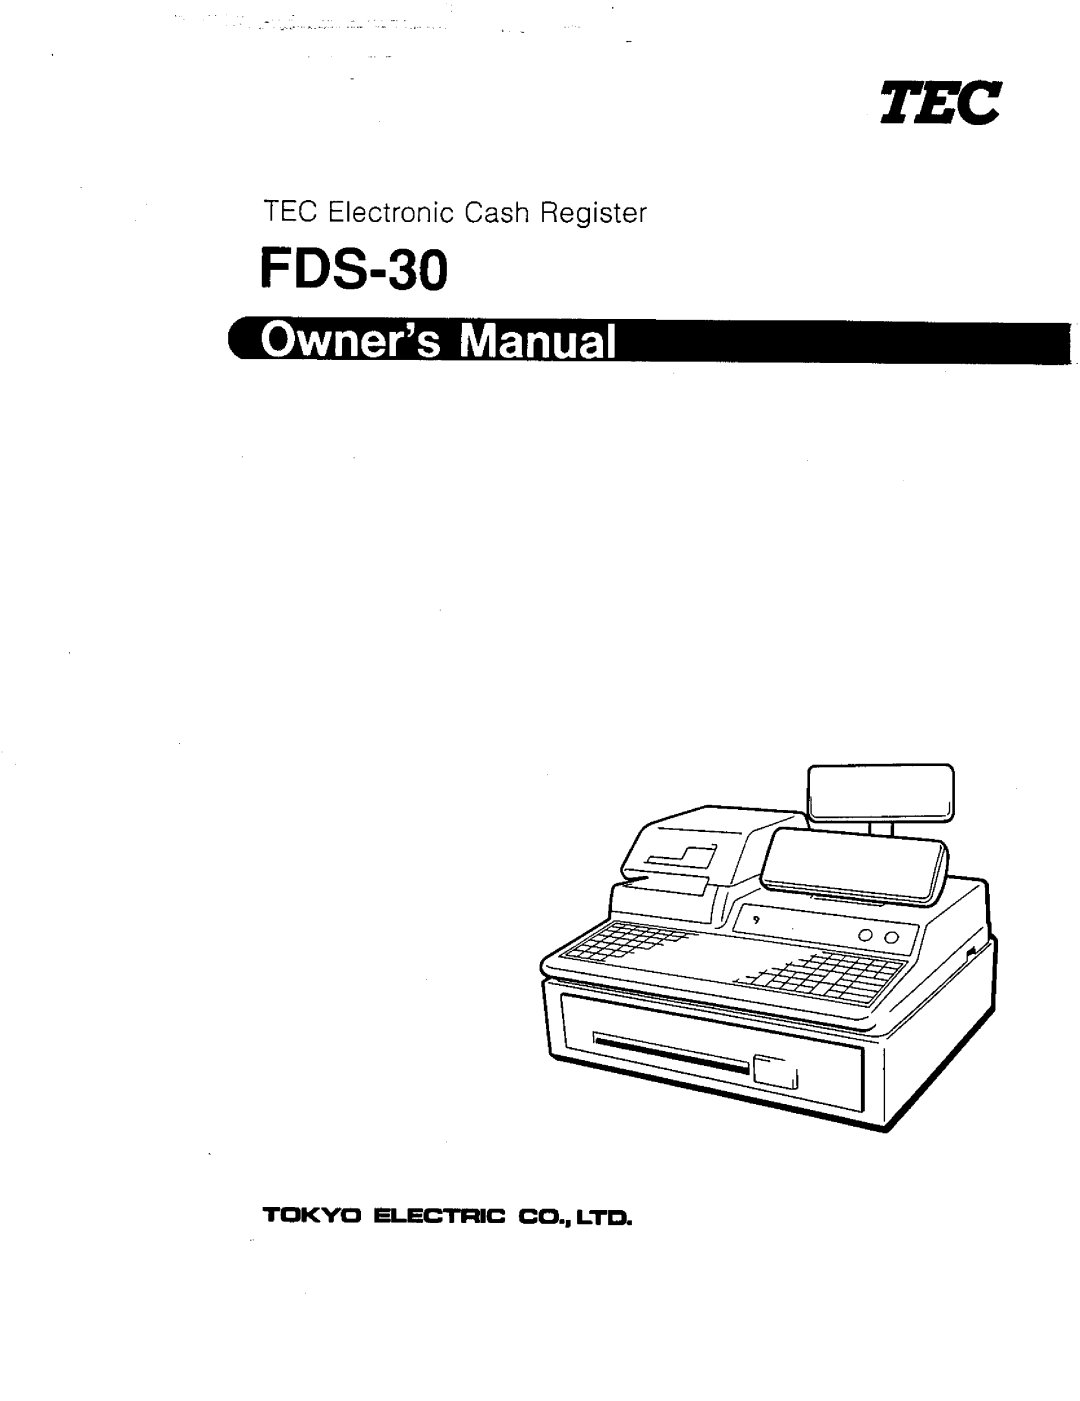 Toshiba FDS-30 manual 